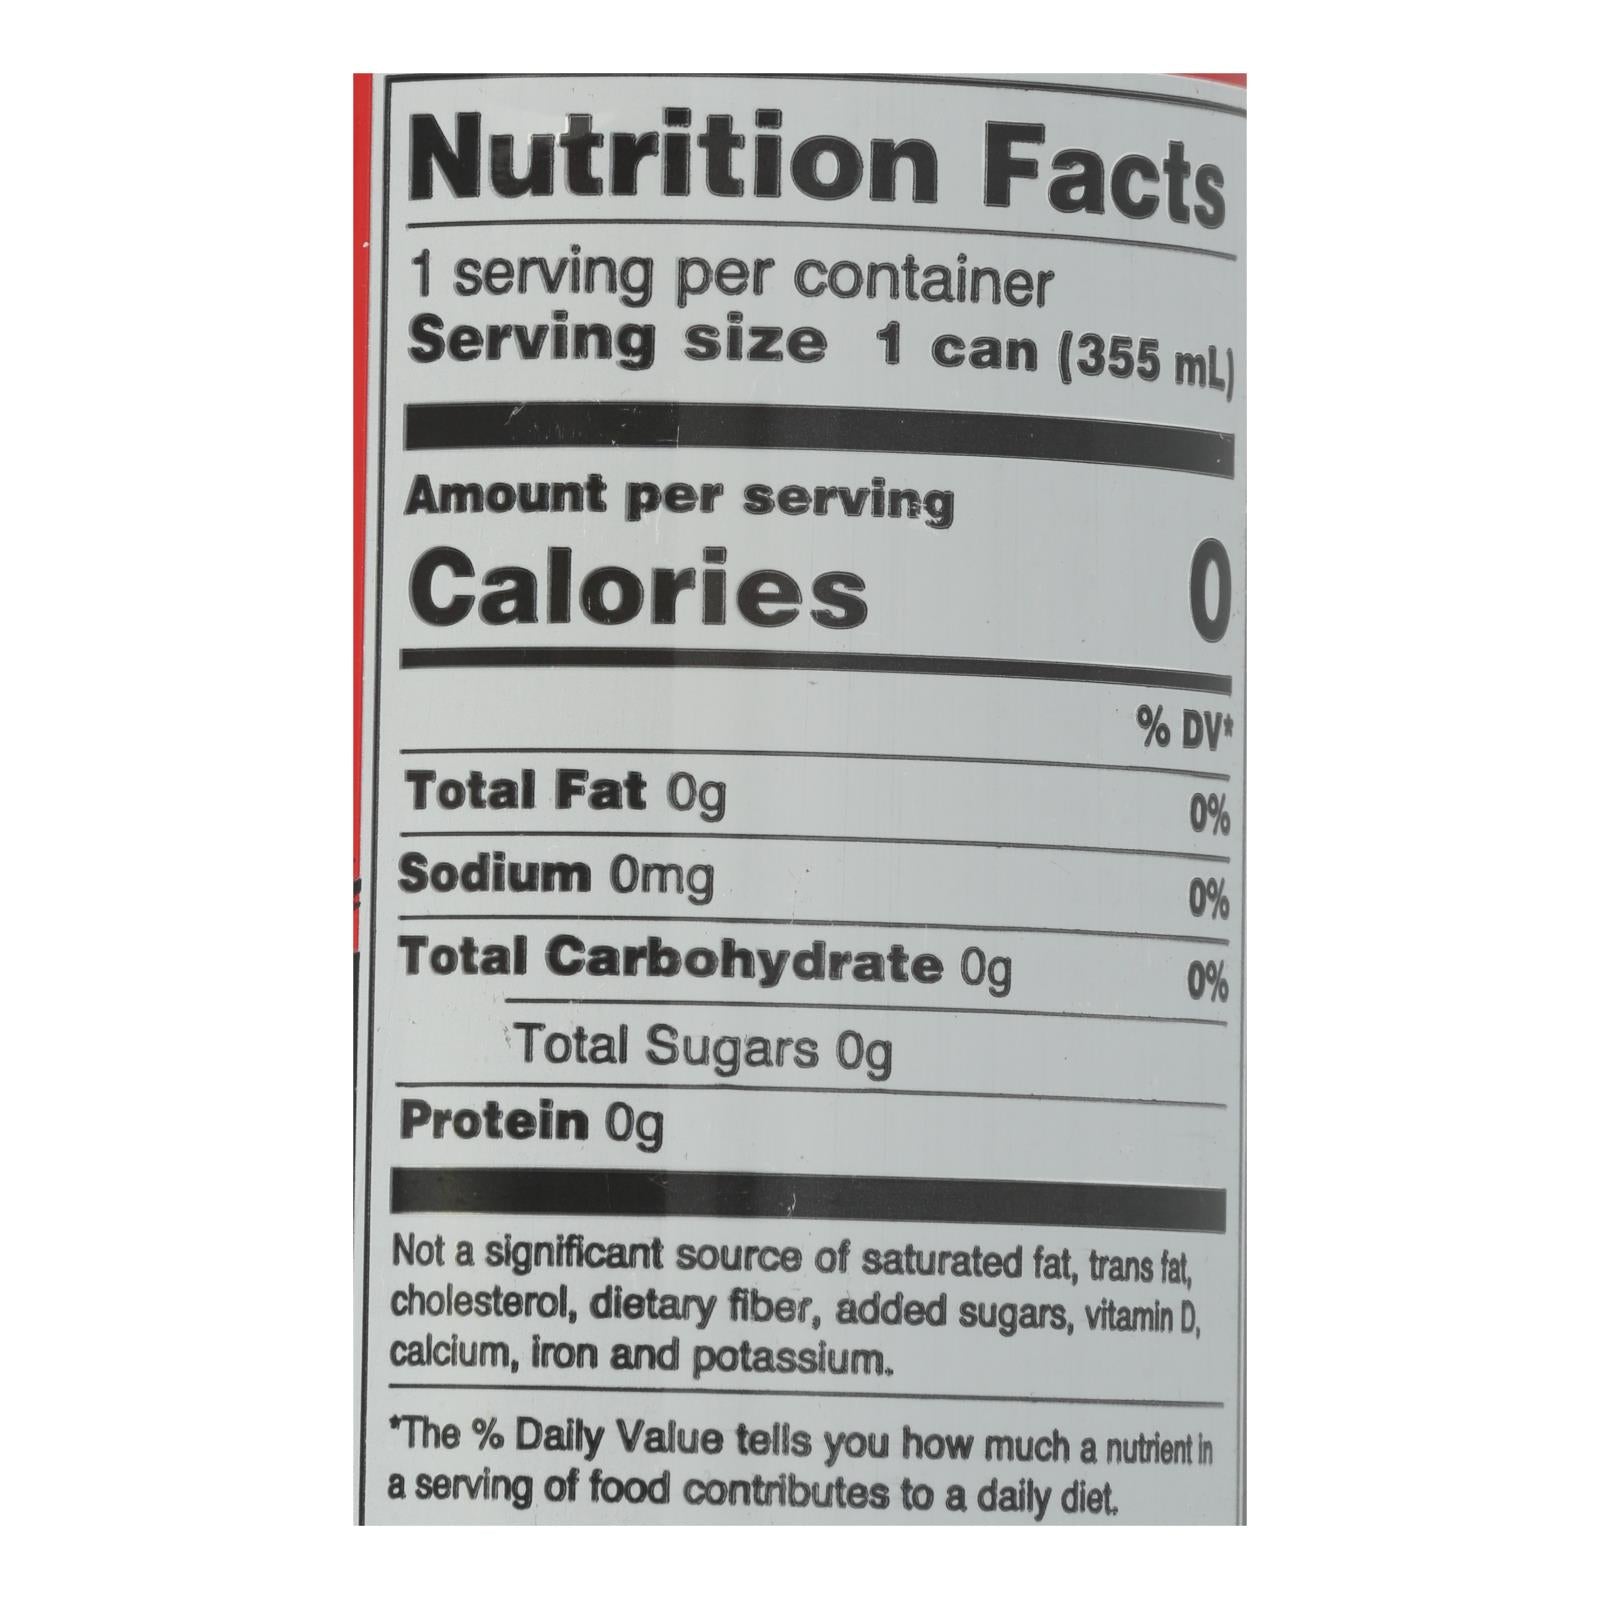 Zevia Zero Calorie Energy Drink - Grapefruit - Case Of 12 - 12 Fl Oz